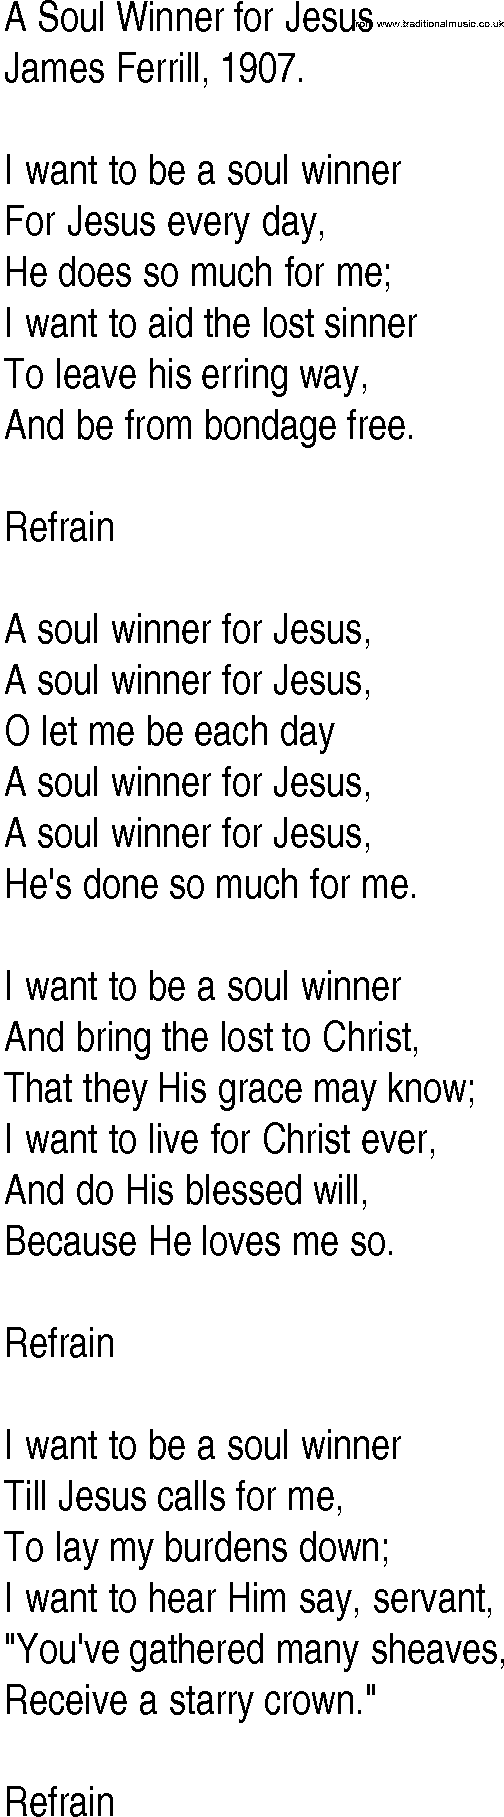 Hymn and Gospel Song: A Soul Winner for Jesus by James Ferrill lyrics